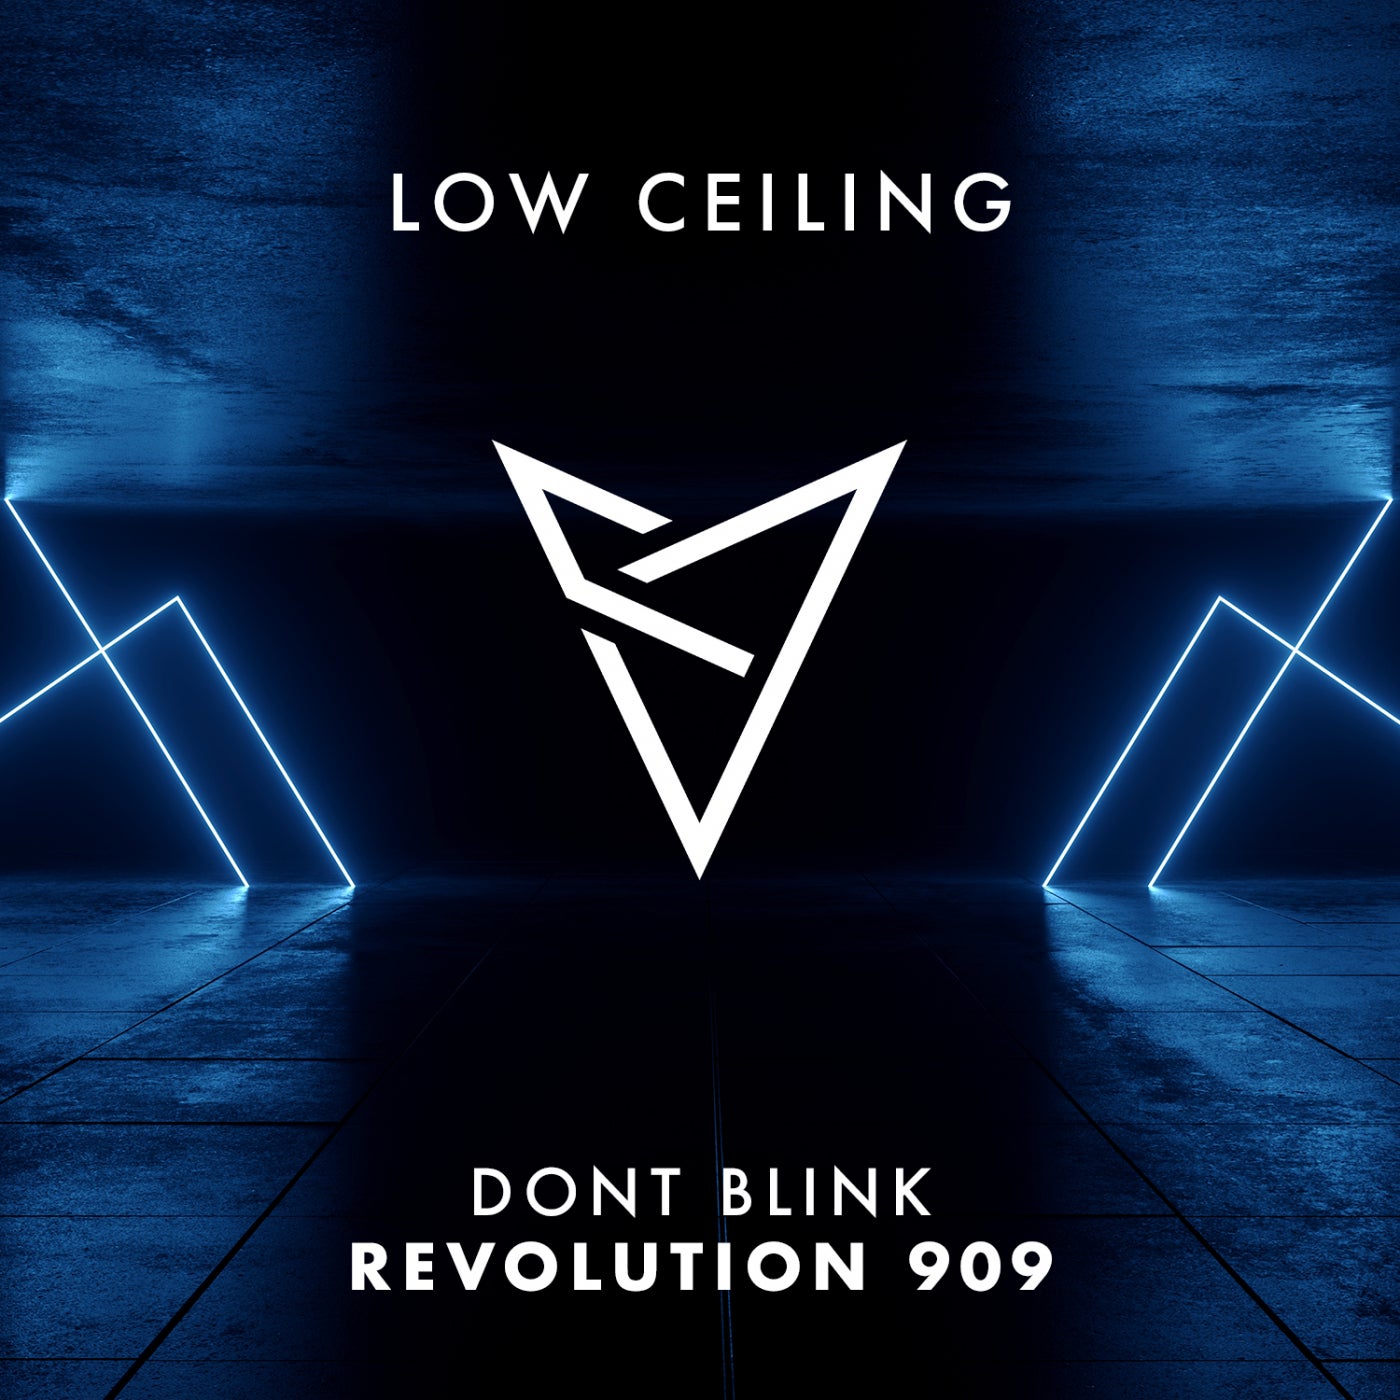 DONT BLINK - REVOLUTION 909 [LOWC043]